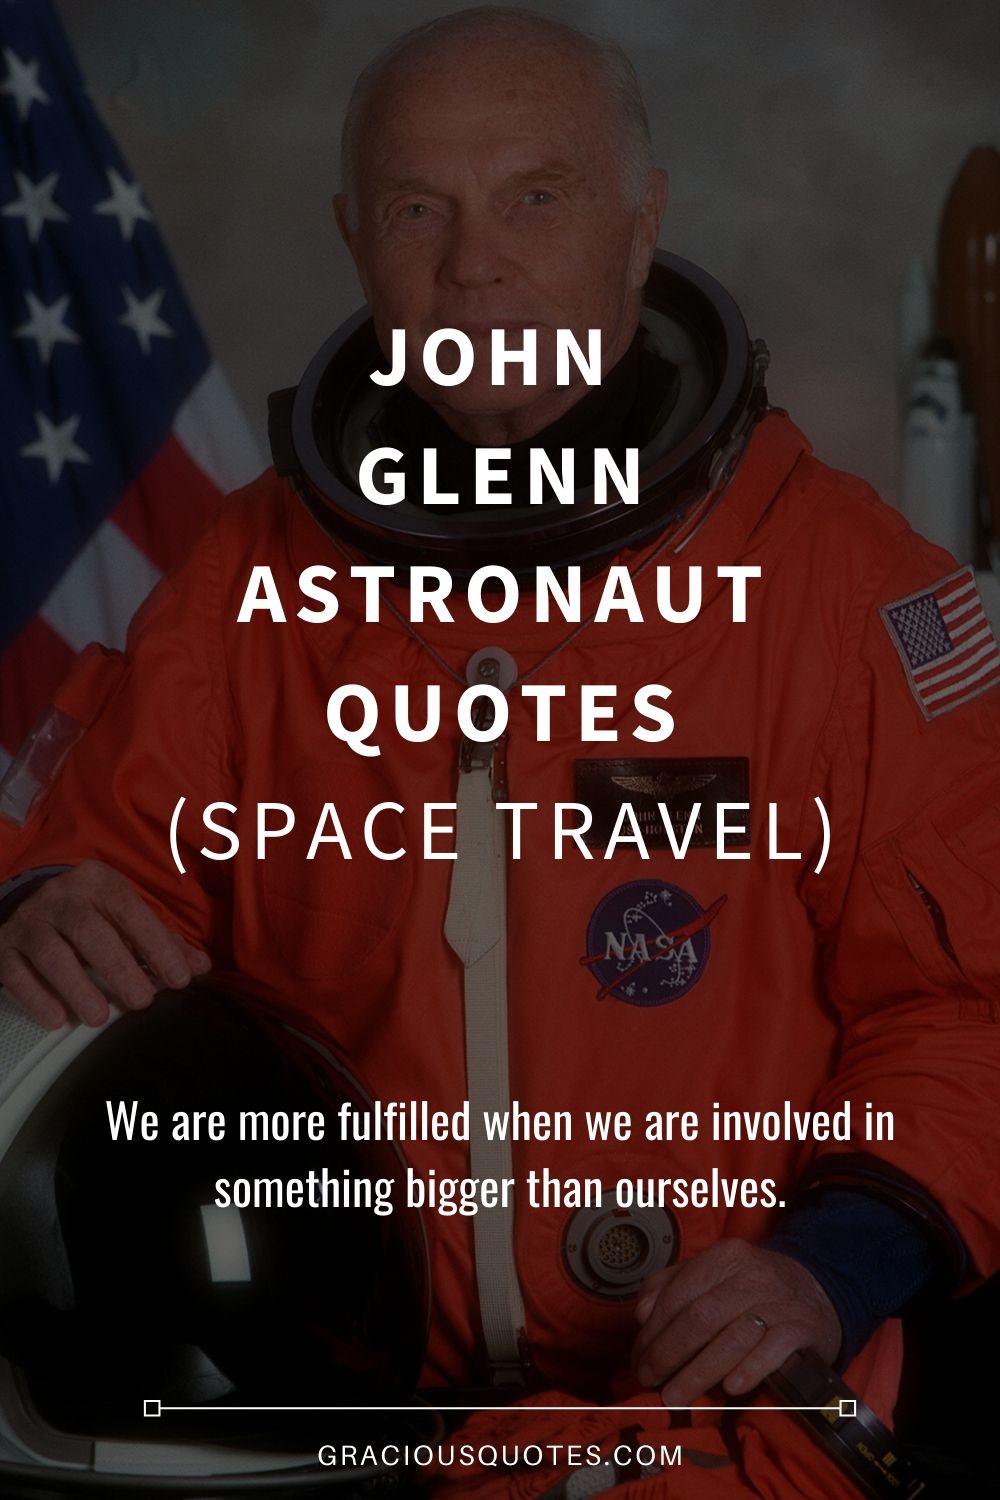 John Glenn Astronaut Quotes (SPACE TRAVEL) - Gracious Quotes